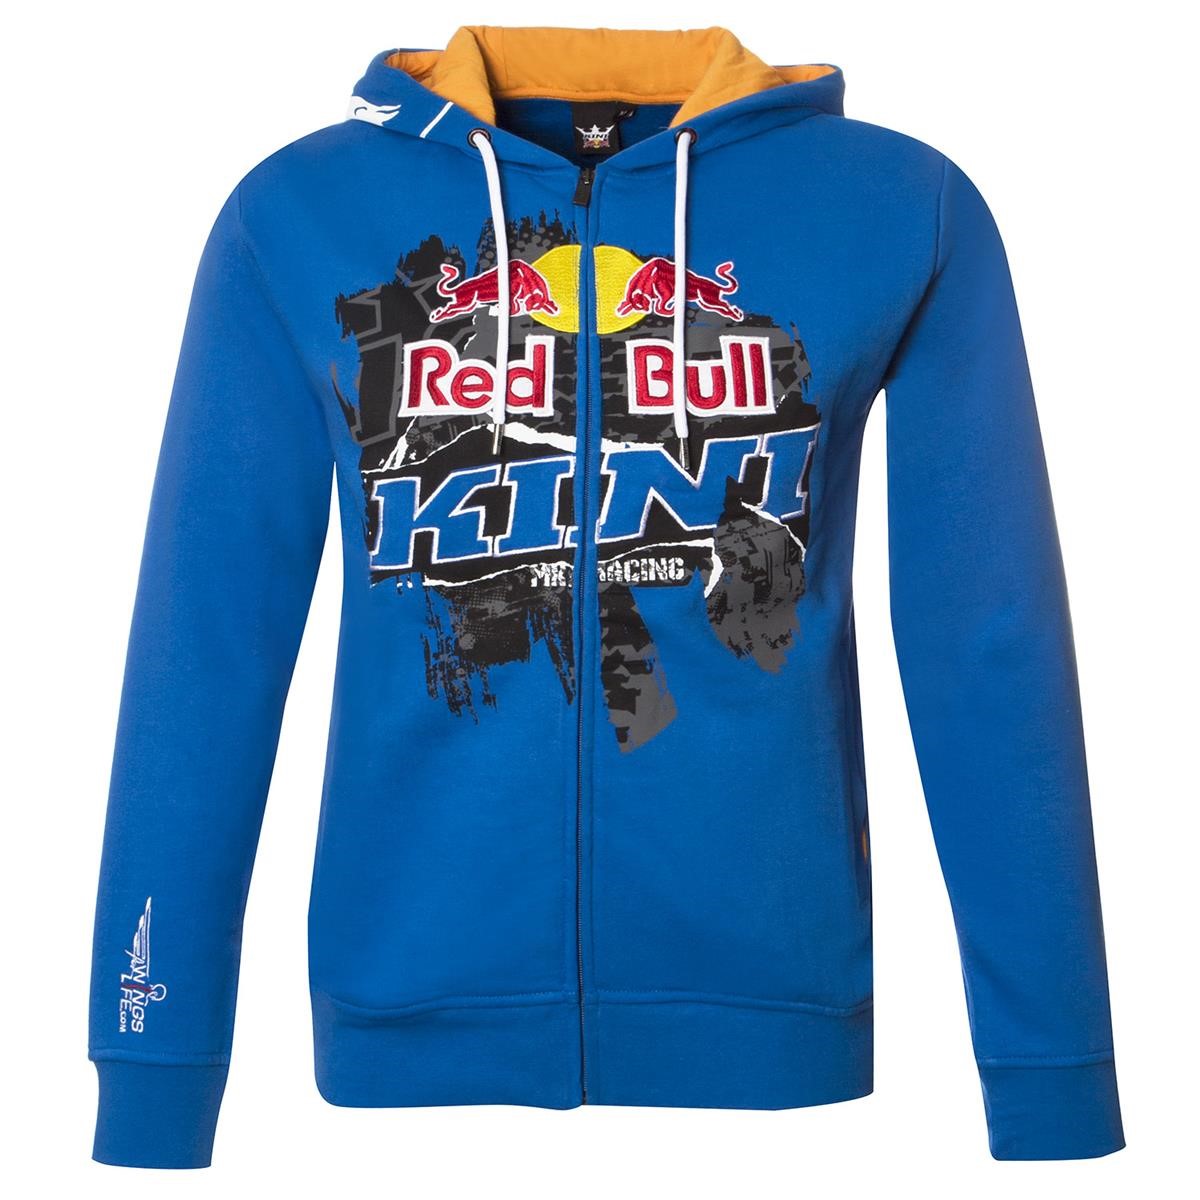 Kini Red Bull Zip-Hoody Collage Blau